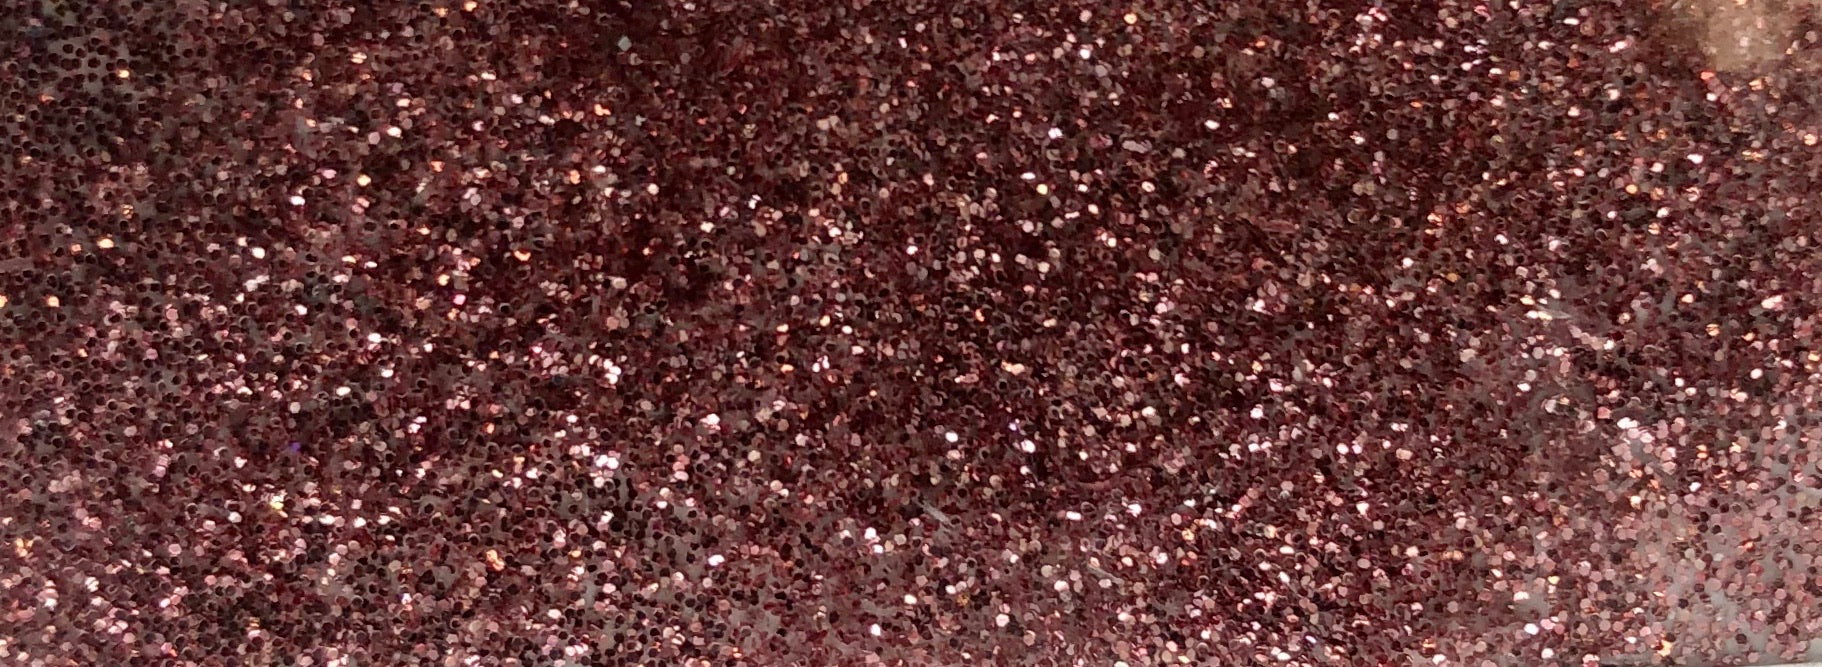 Glitter Poofer - Dusty Rose - Looney Bin Products 